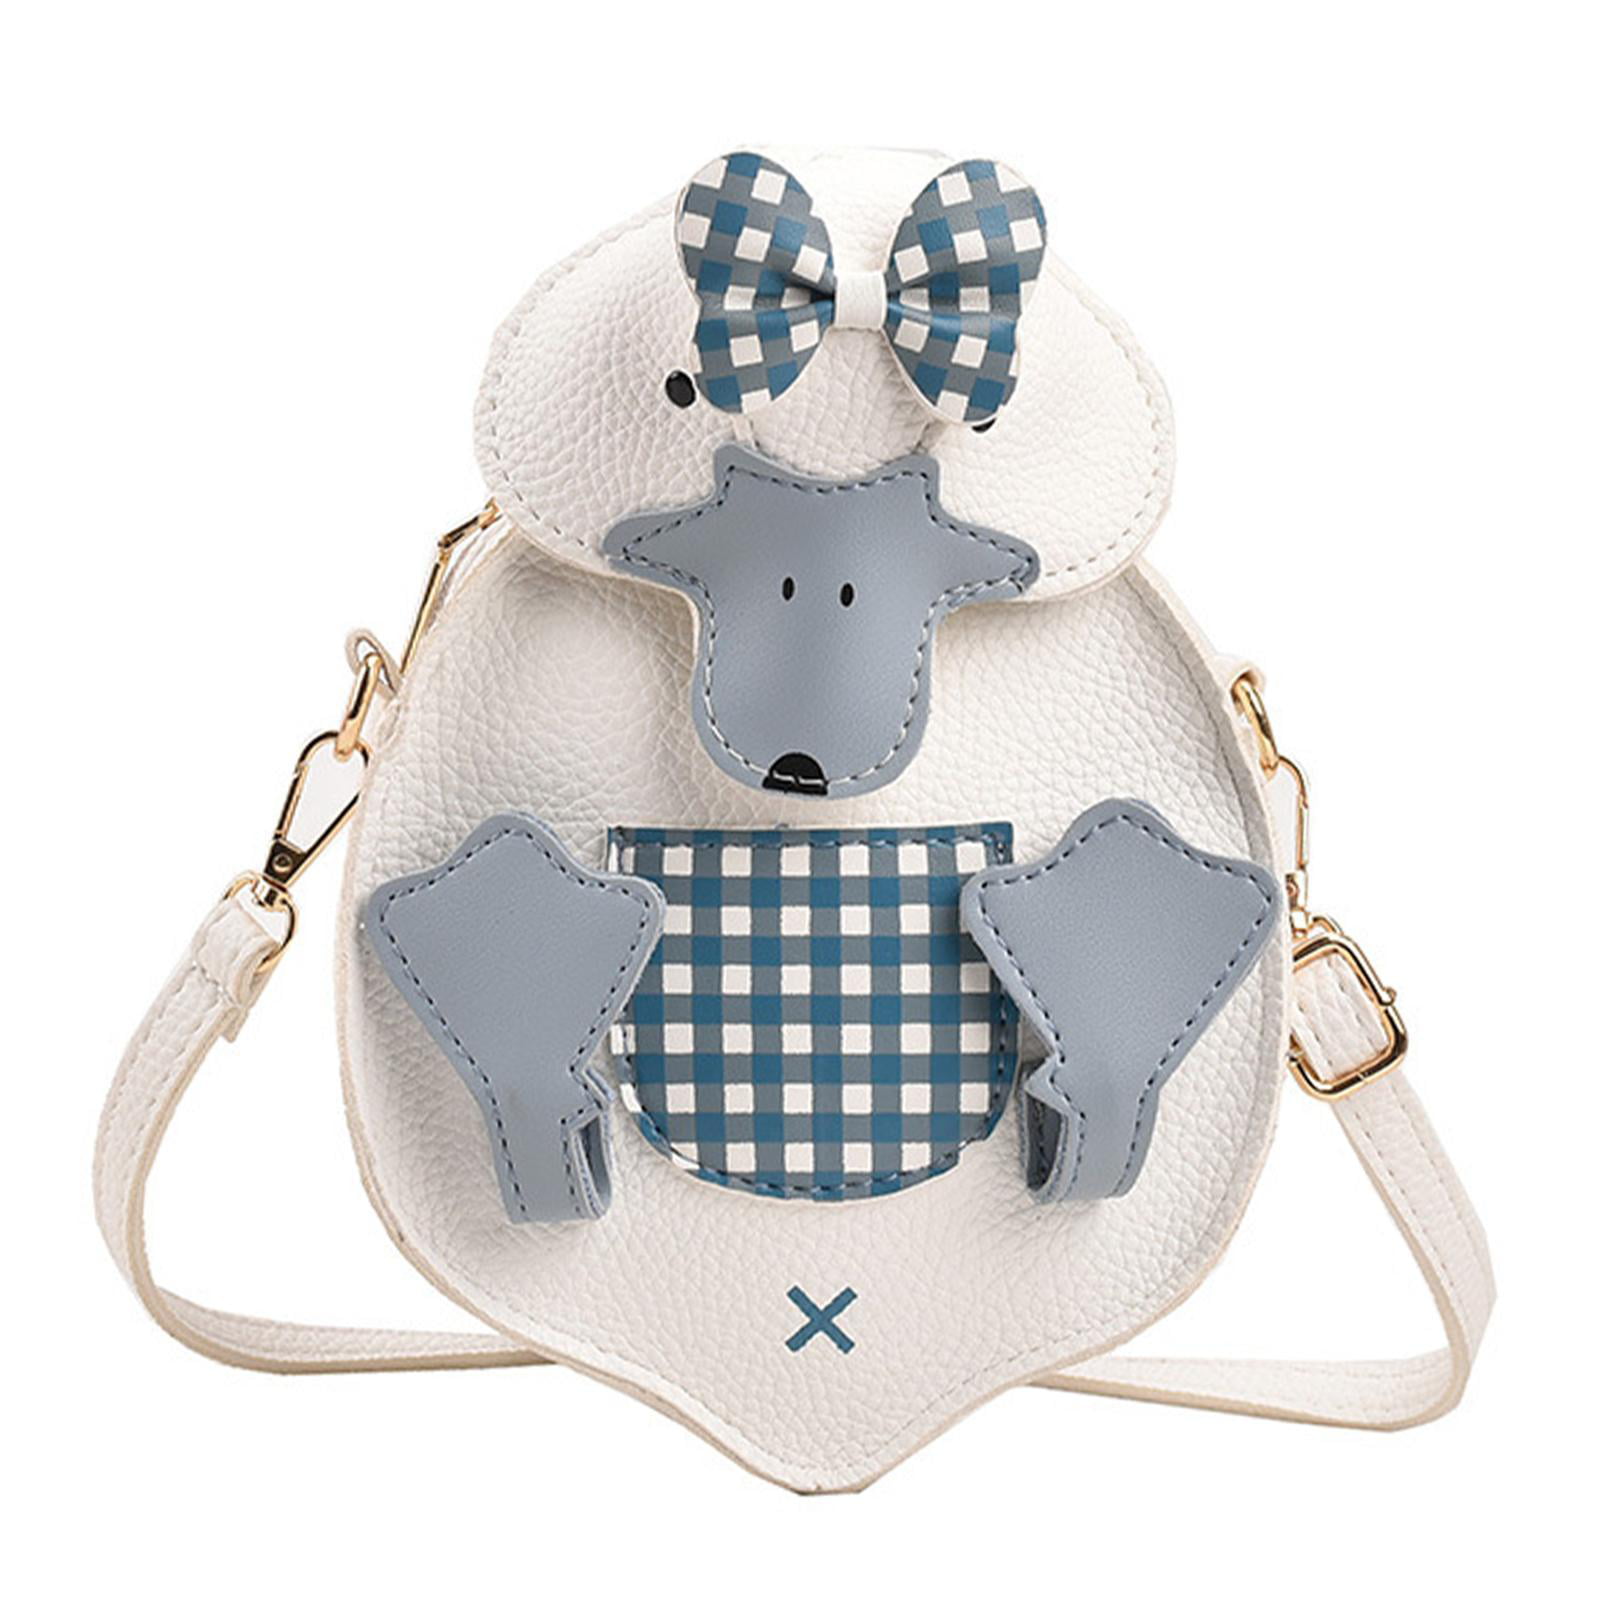 Duck Purse for Girls bag Kids Women Handbag Purse Cute PU Leather Anime Decor Cute Cartoon Shoulder Bag for Gift Holidays Men 7a0bee59 453d 4451 9d20 0e1c00788b22.f29c9ed4ce9c9a645312418b2b59e5ee